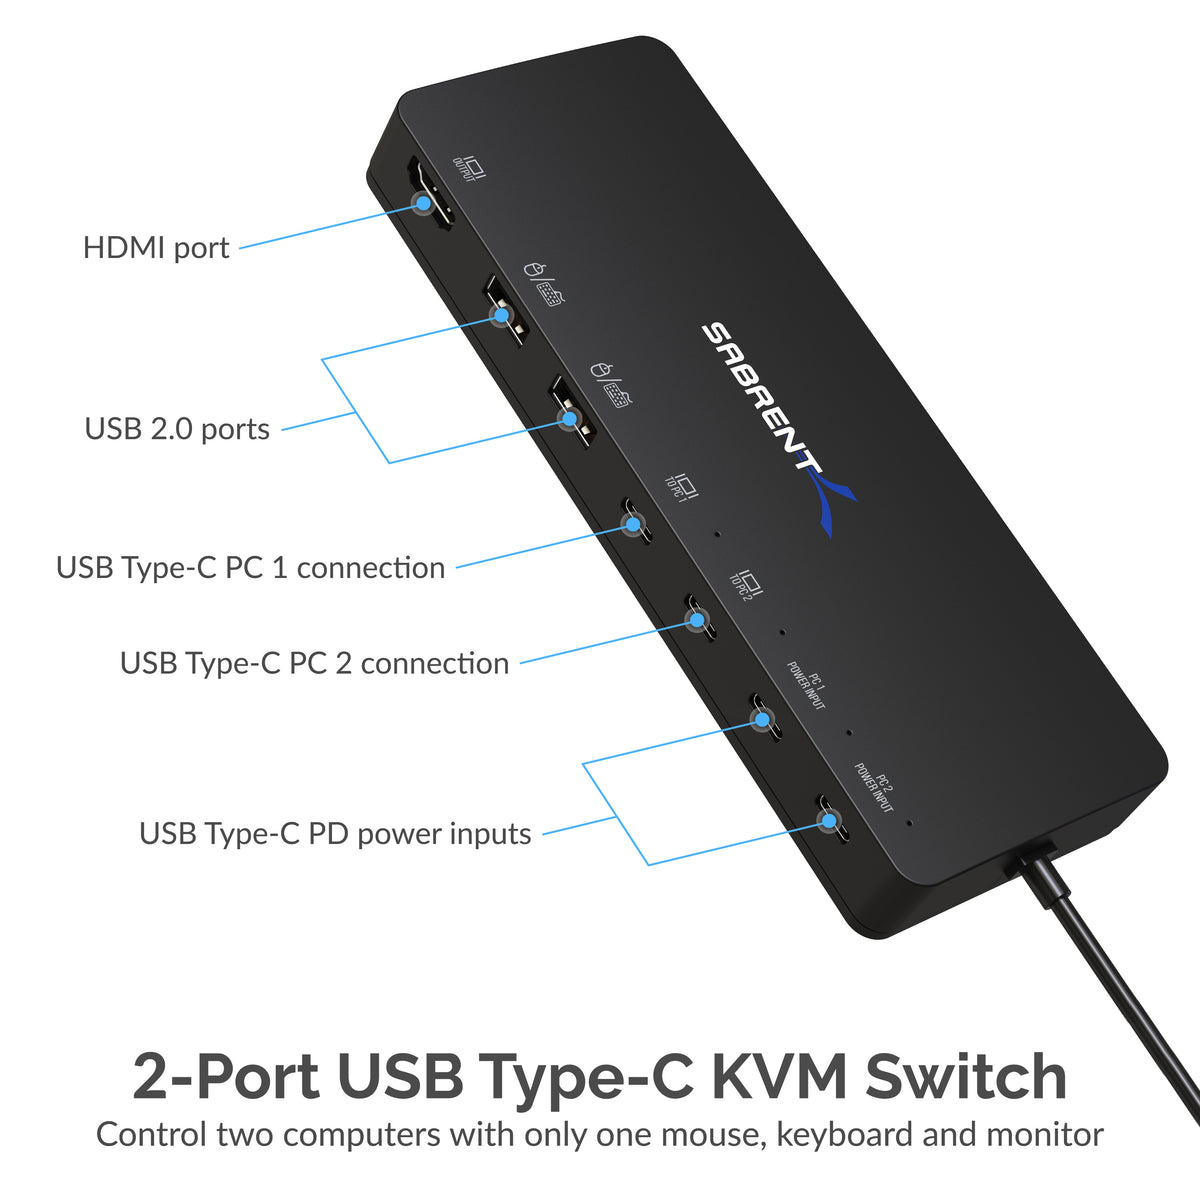 2-Port USB Type-C KVM Switch